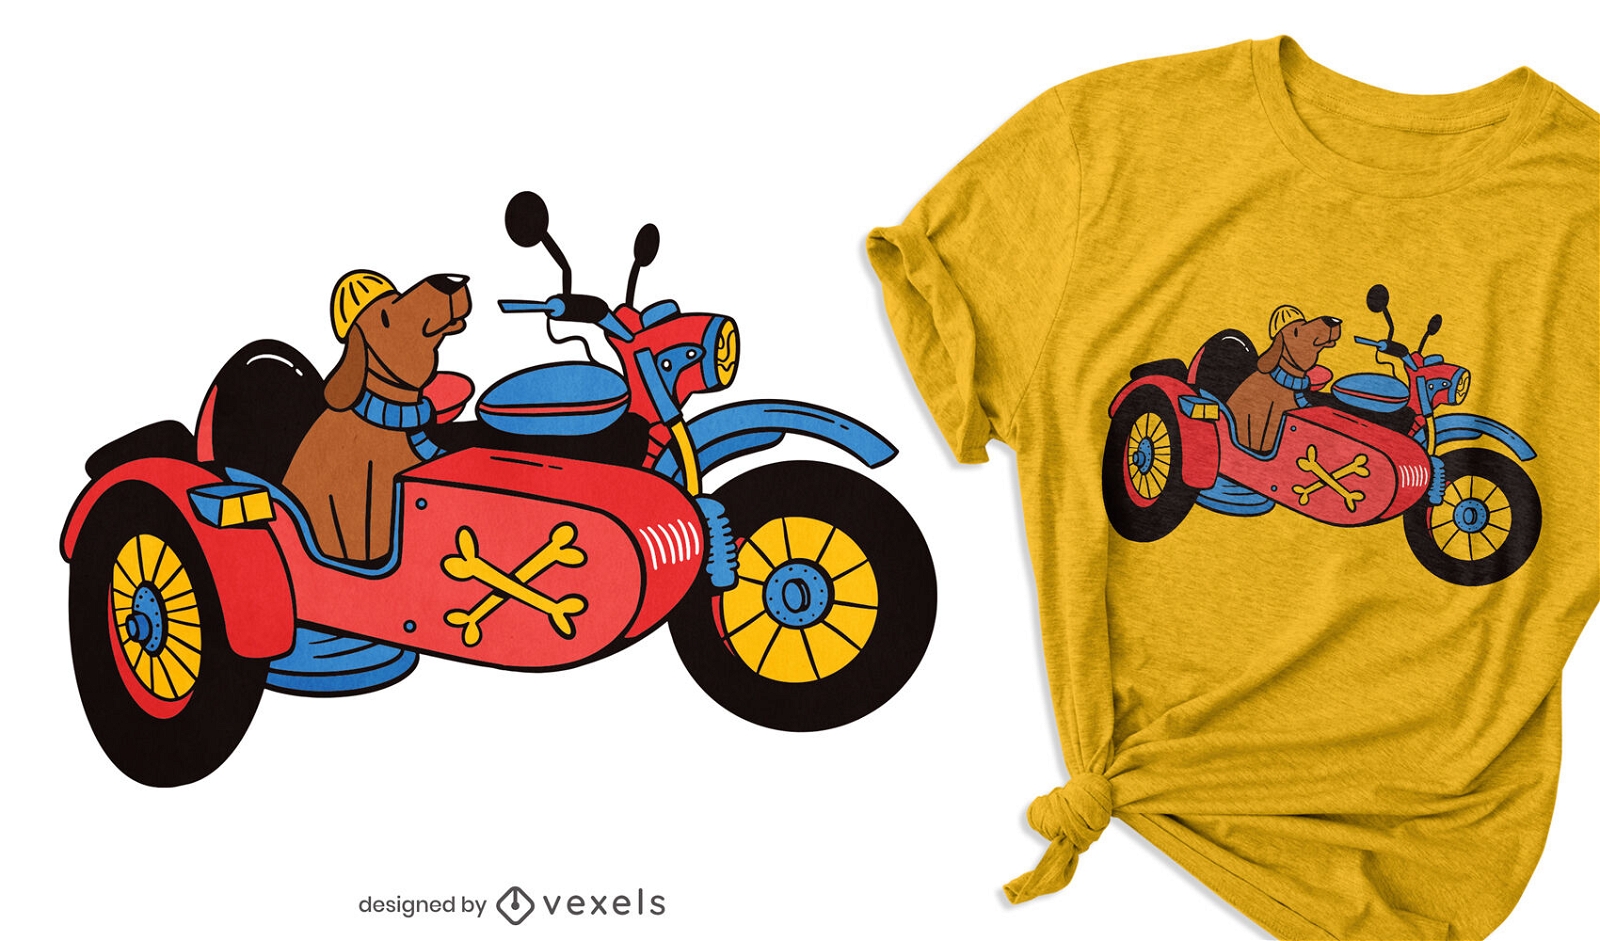 Dog in sidecar t-shirt design